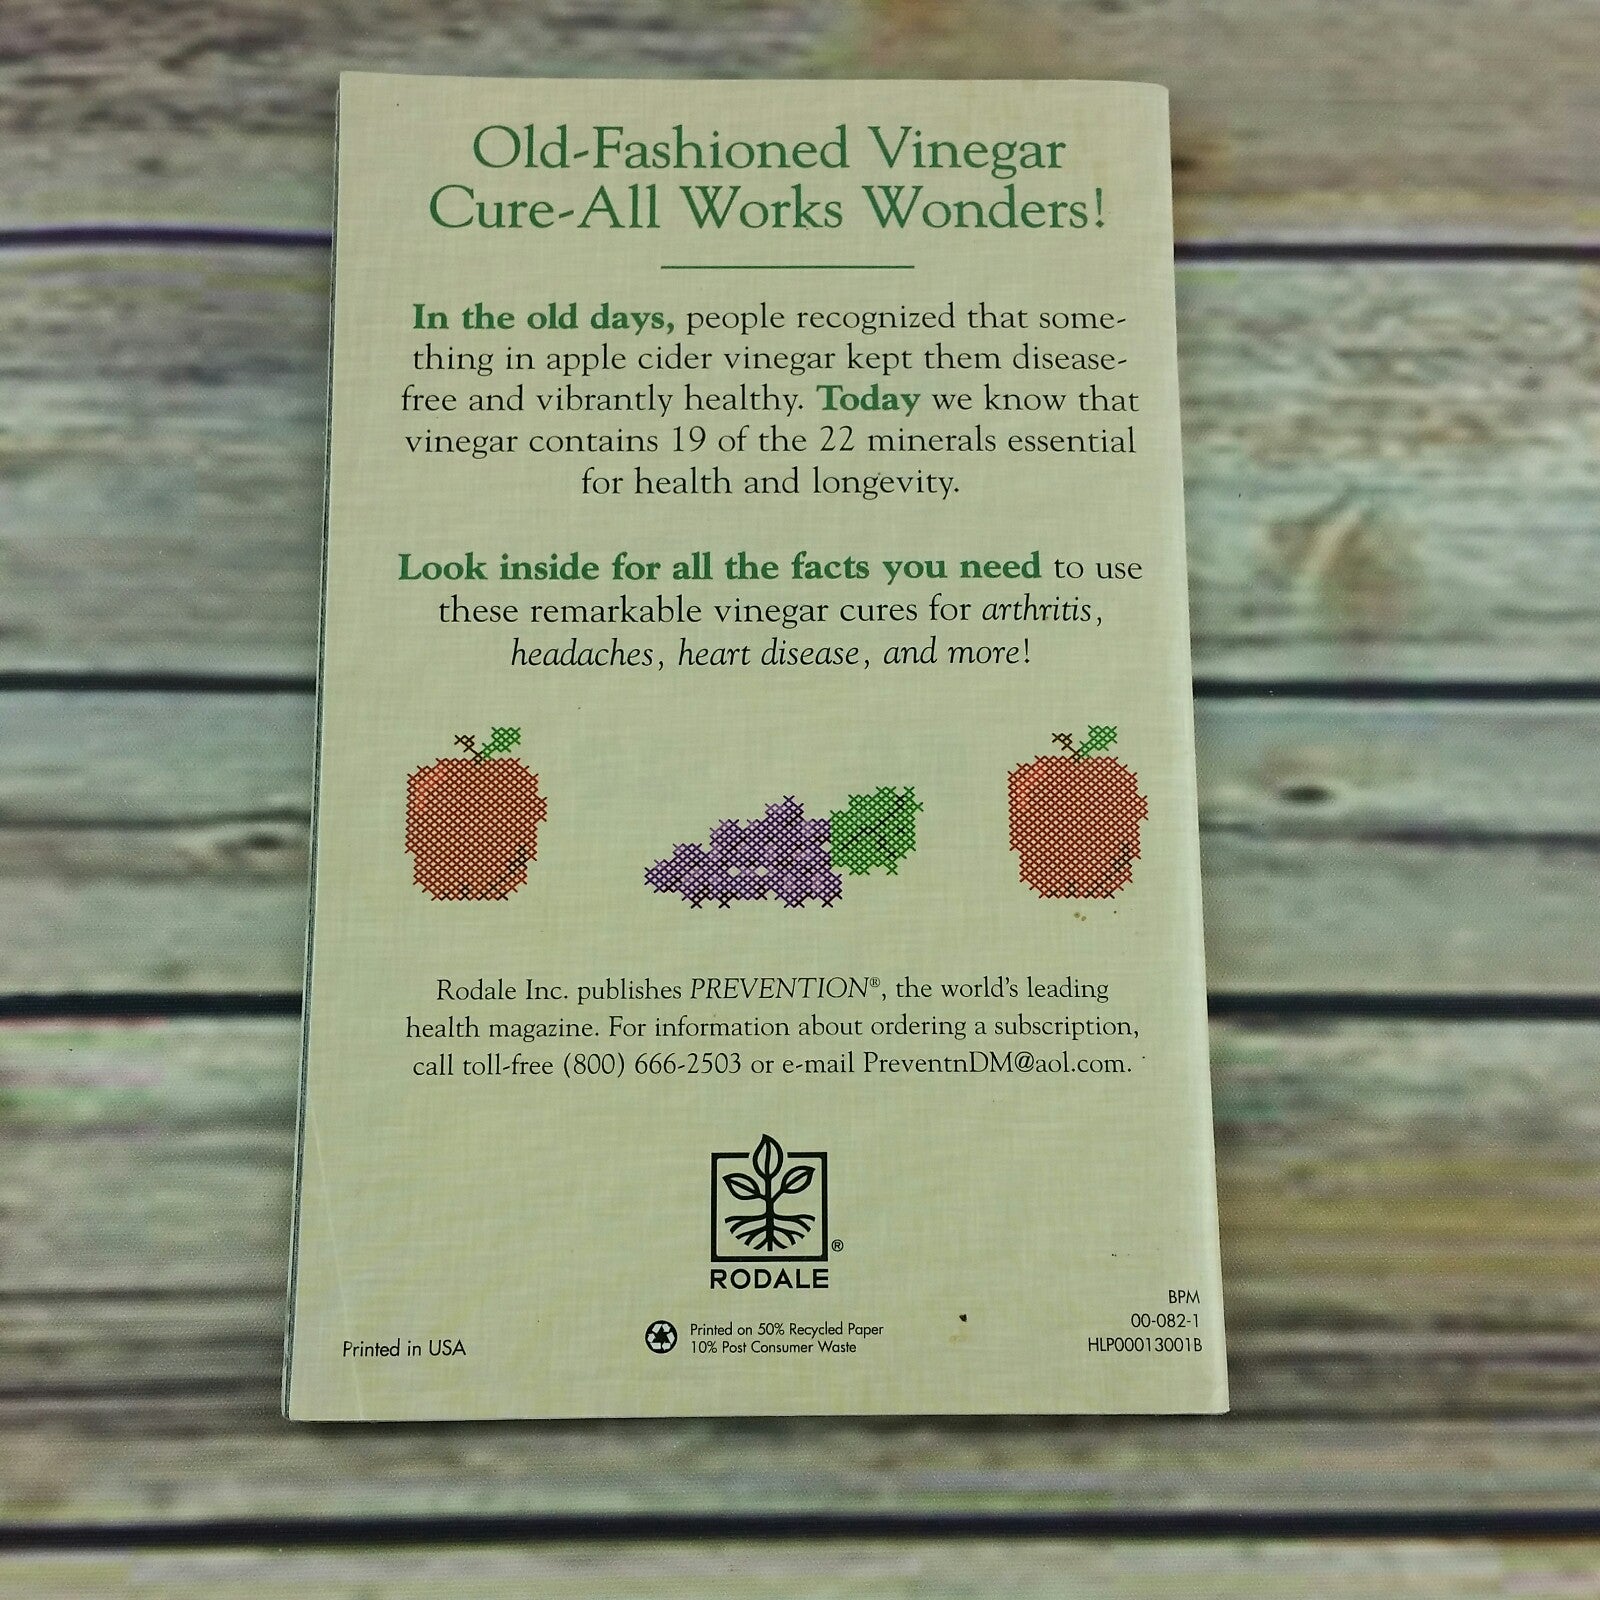 Vintage Vinegar Cures for Healing Book 1999 3rd Printing Paperback Melodie Moore - At Grandma's Table